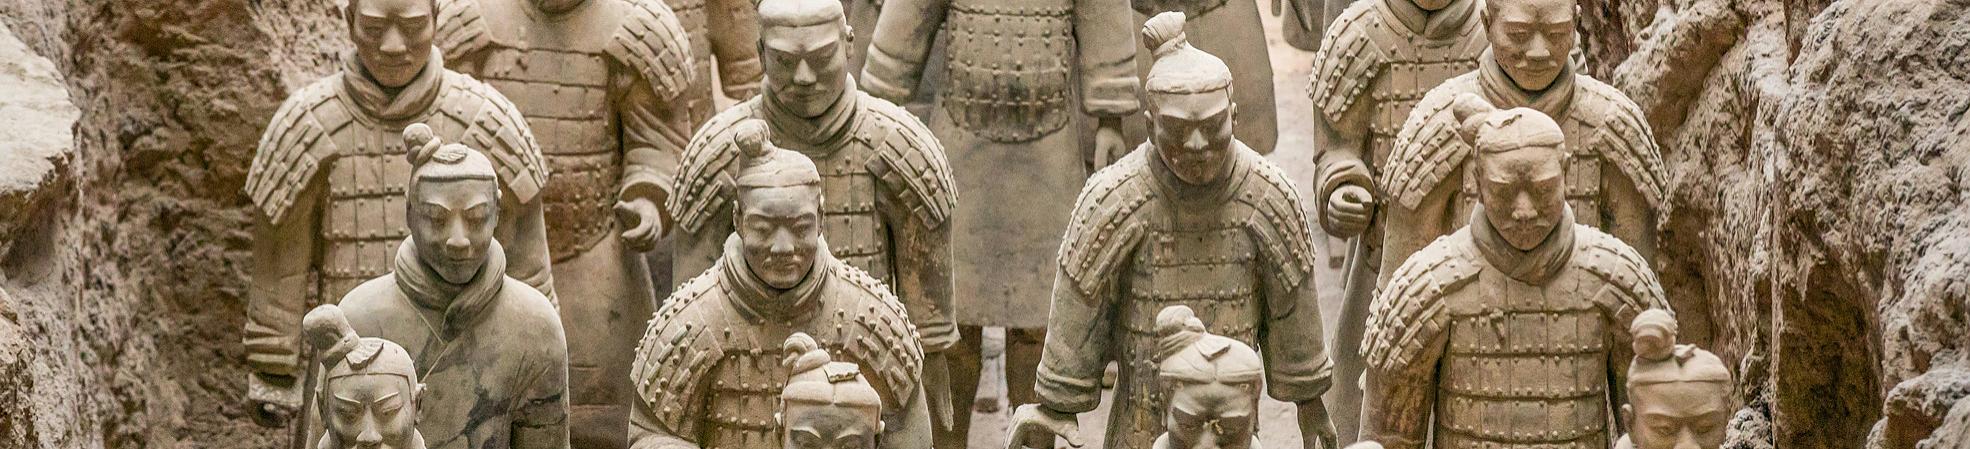 Xi'an History: Xi'an Emperor, Tang Dynasty, Silk Road